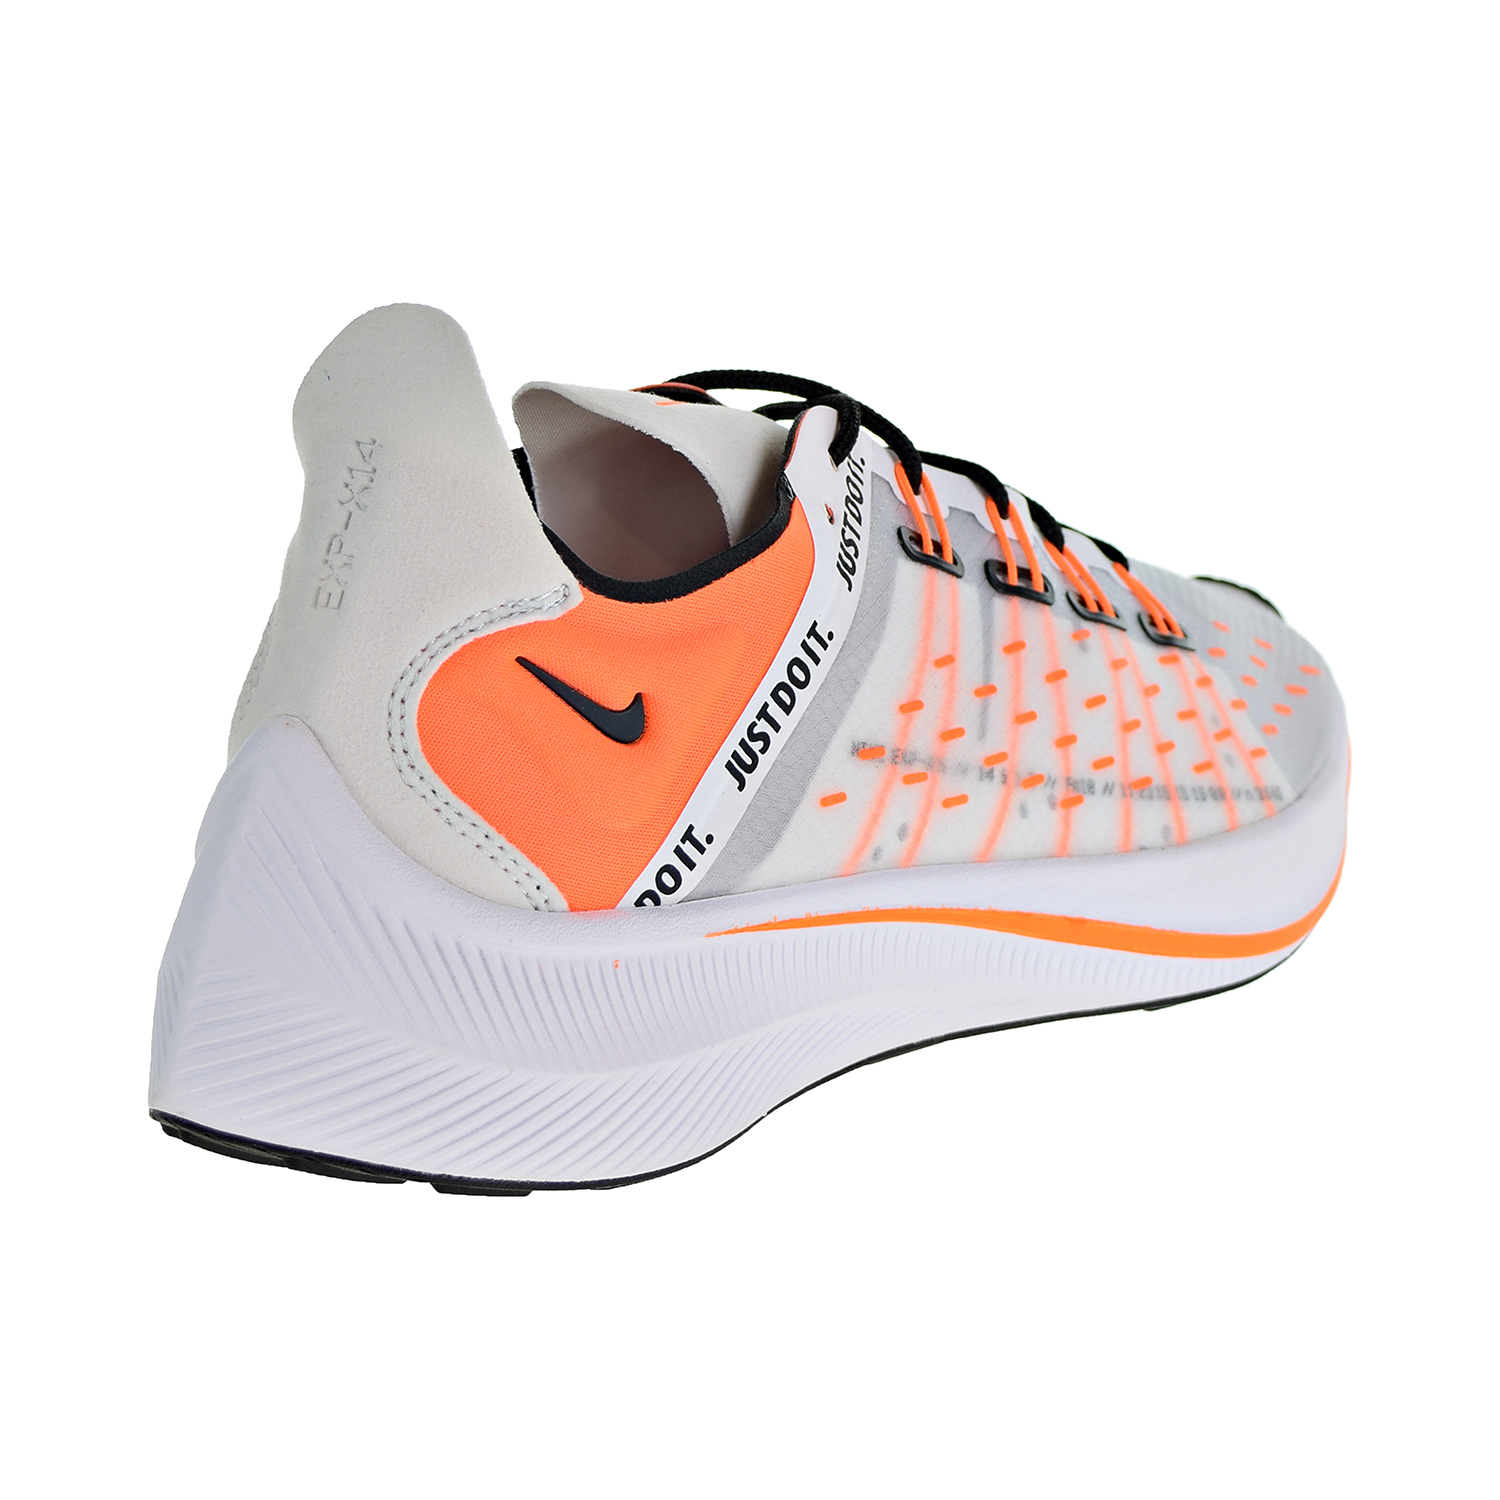 Nike EXP-X14 SE "Just Do It" Men's Shoes White/Total Orange/Black Wolf ao3095-100 - image 3 of 6